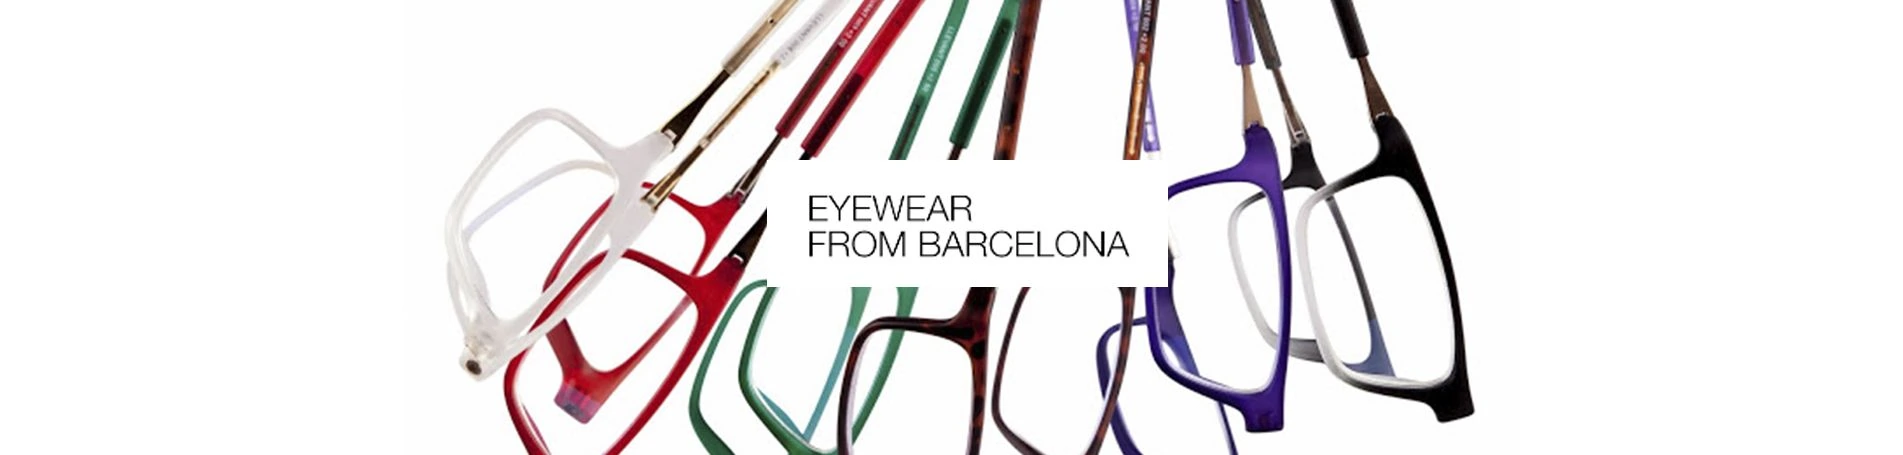 Eyewear from Barcelona, nuevo cliente de Lifting Group